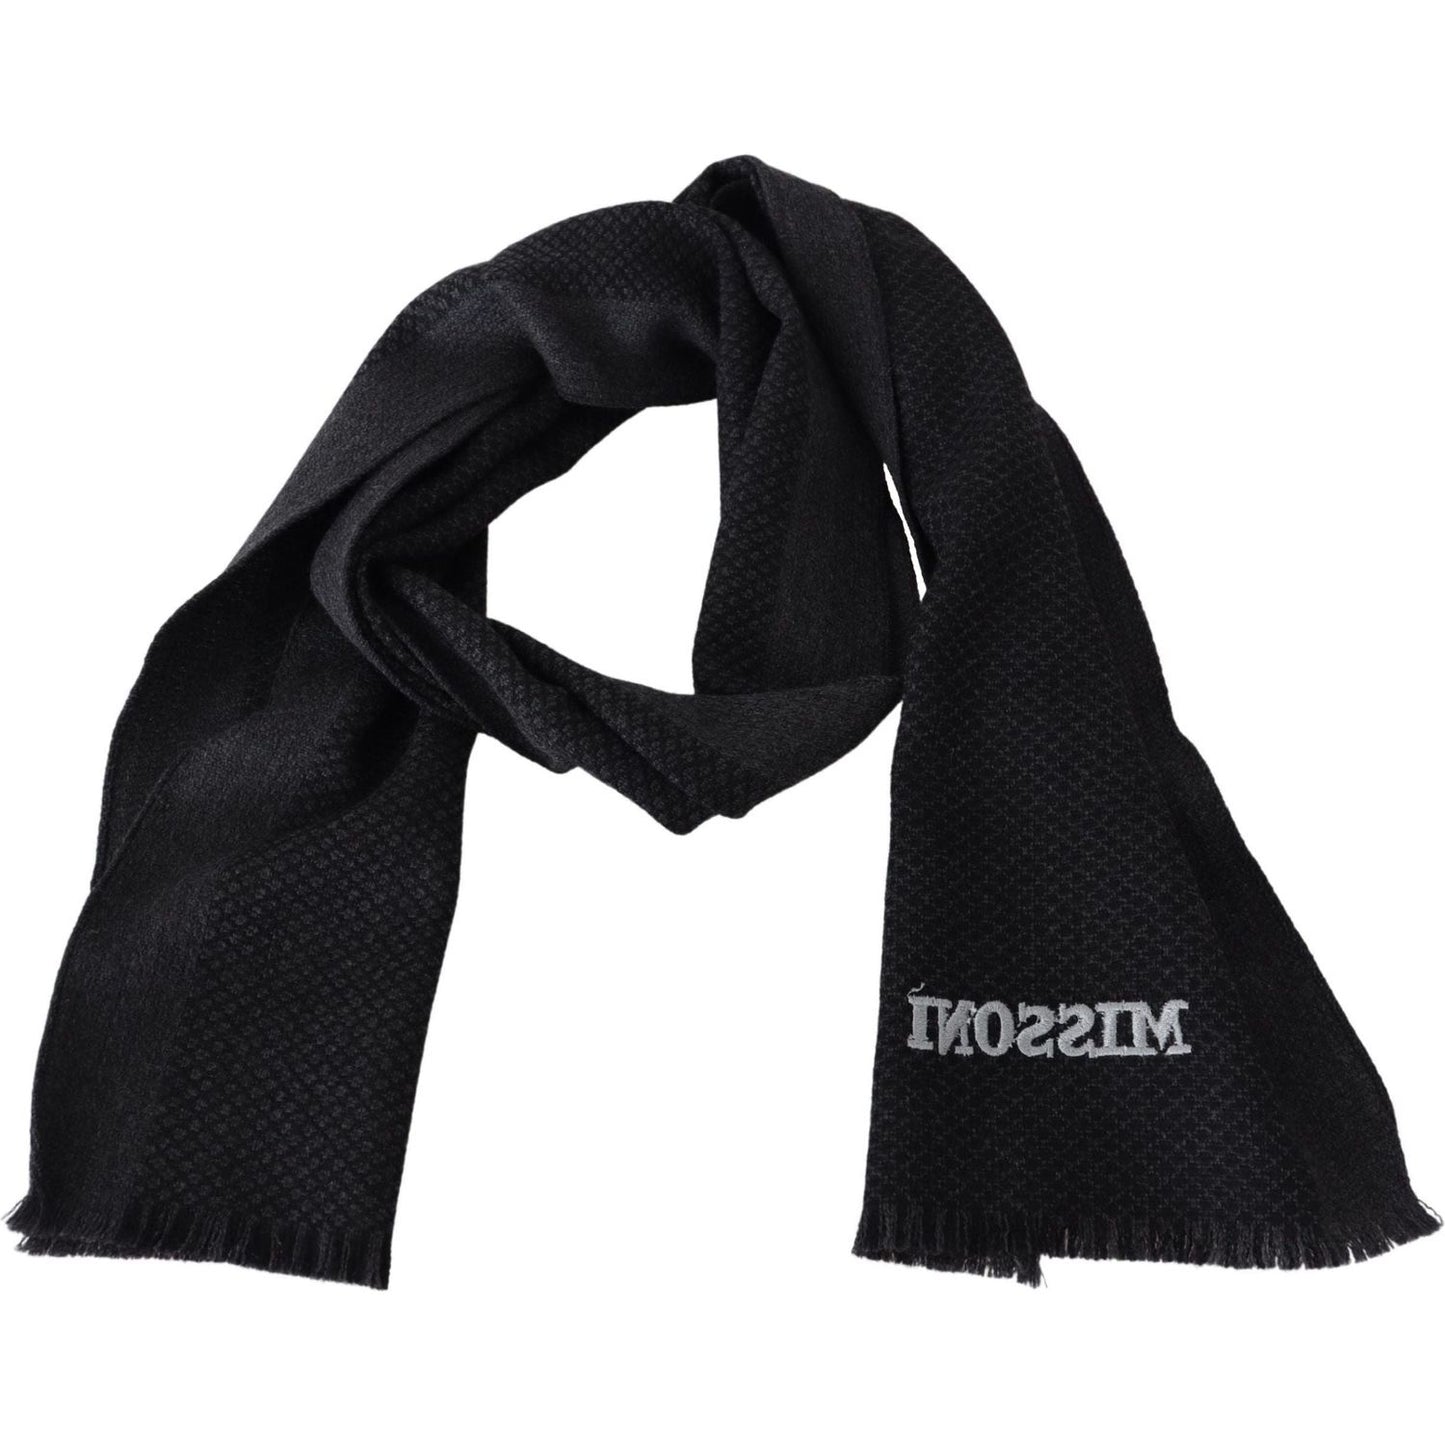 Missoni Elegant Wool Blend Fringed Scarf in Gray gray-wool-knit-unisex-neck-wrap-fringe-shawl-scarf IMG_0492-scaled-2e6e69cf-d33.jpg